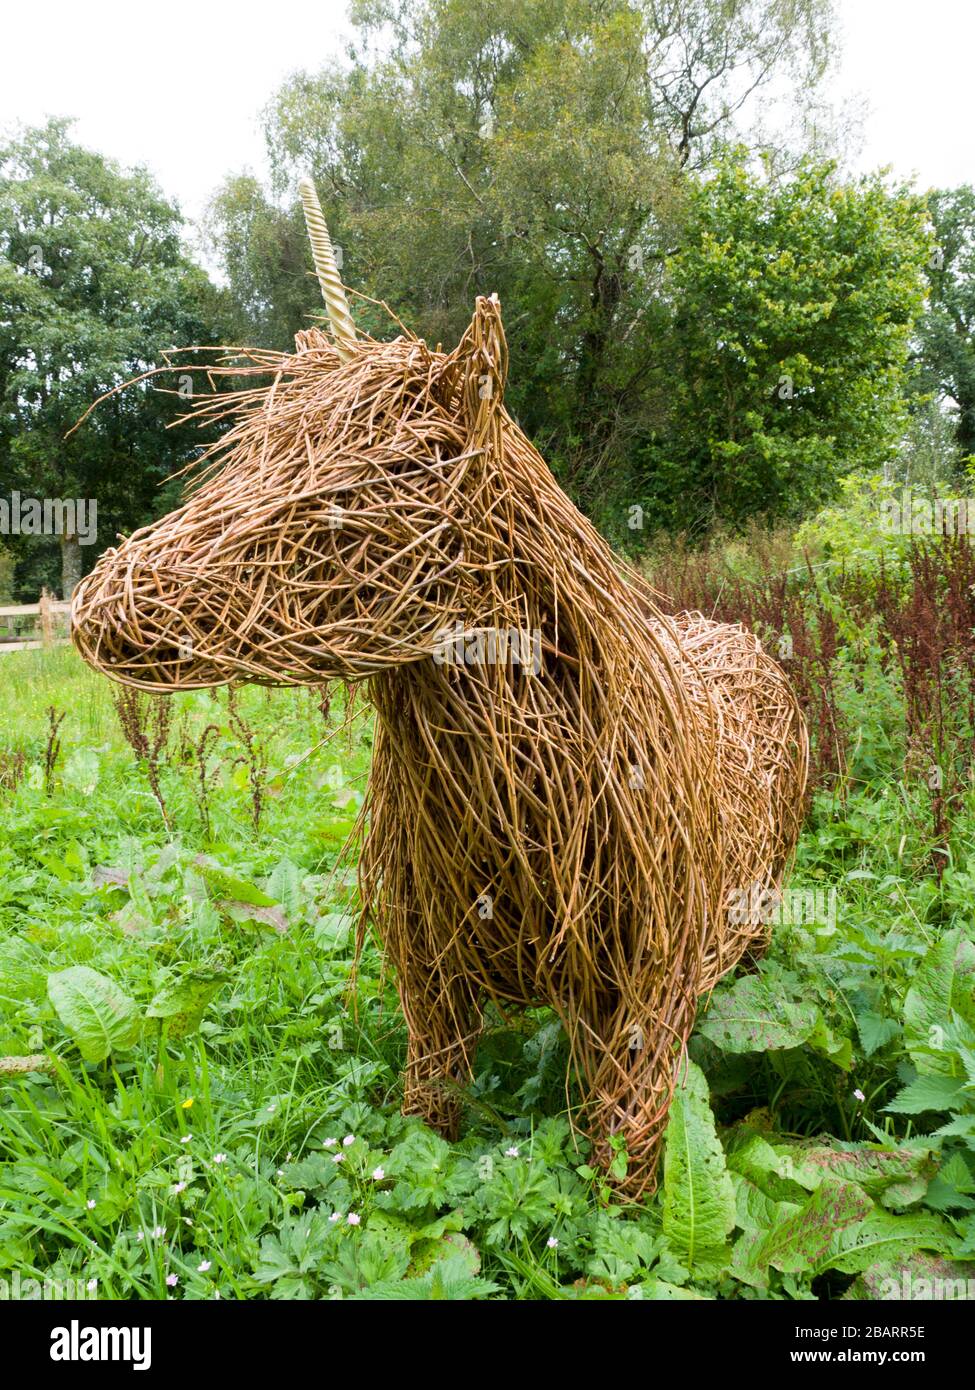 Unicorn statue made of natural products, The Miniature Pony Centre, Dartmoor, Devon, UK Stock Photo